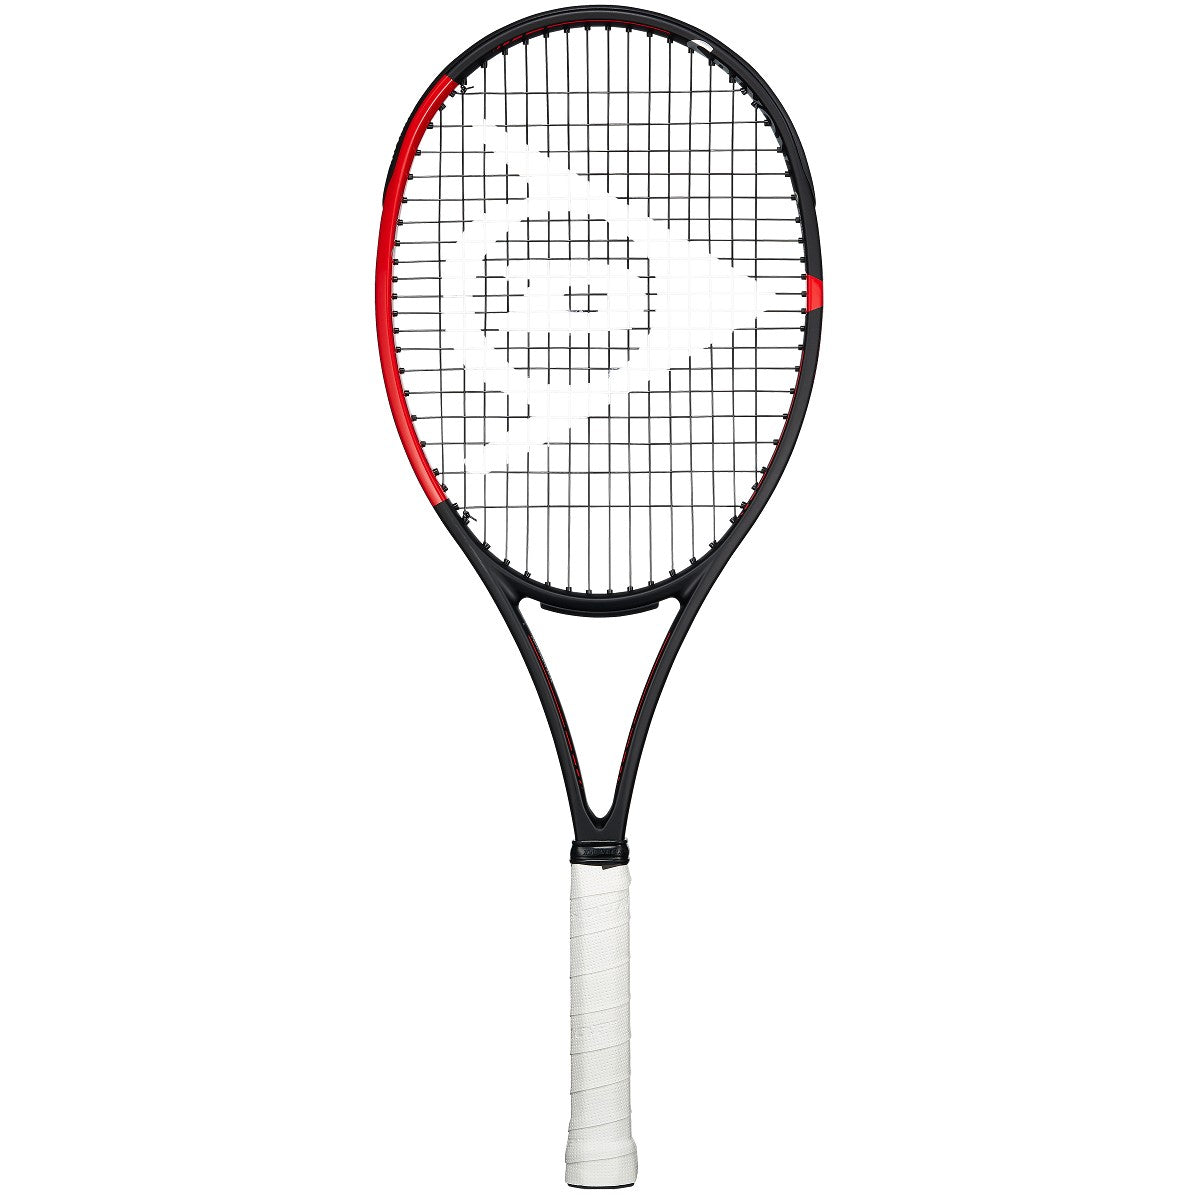 Srx n 19 CX200 LS G1 Tennis Racket